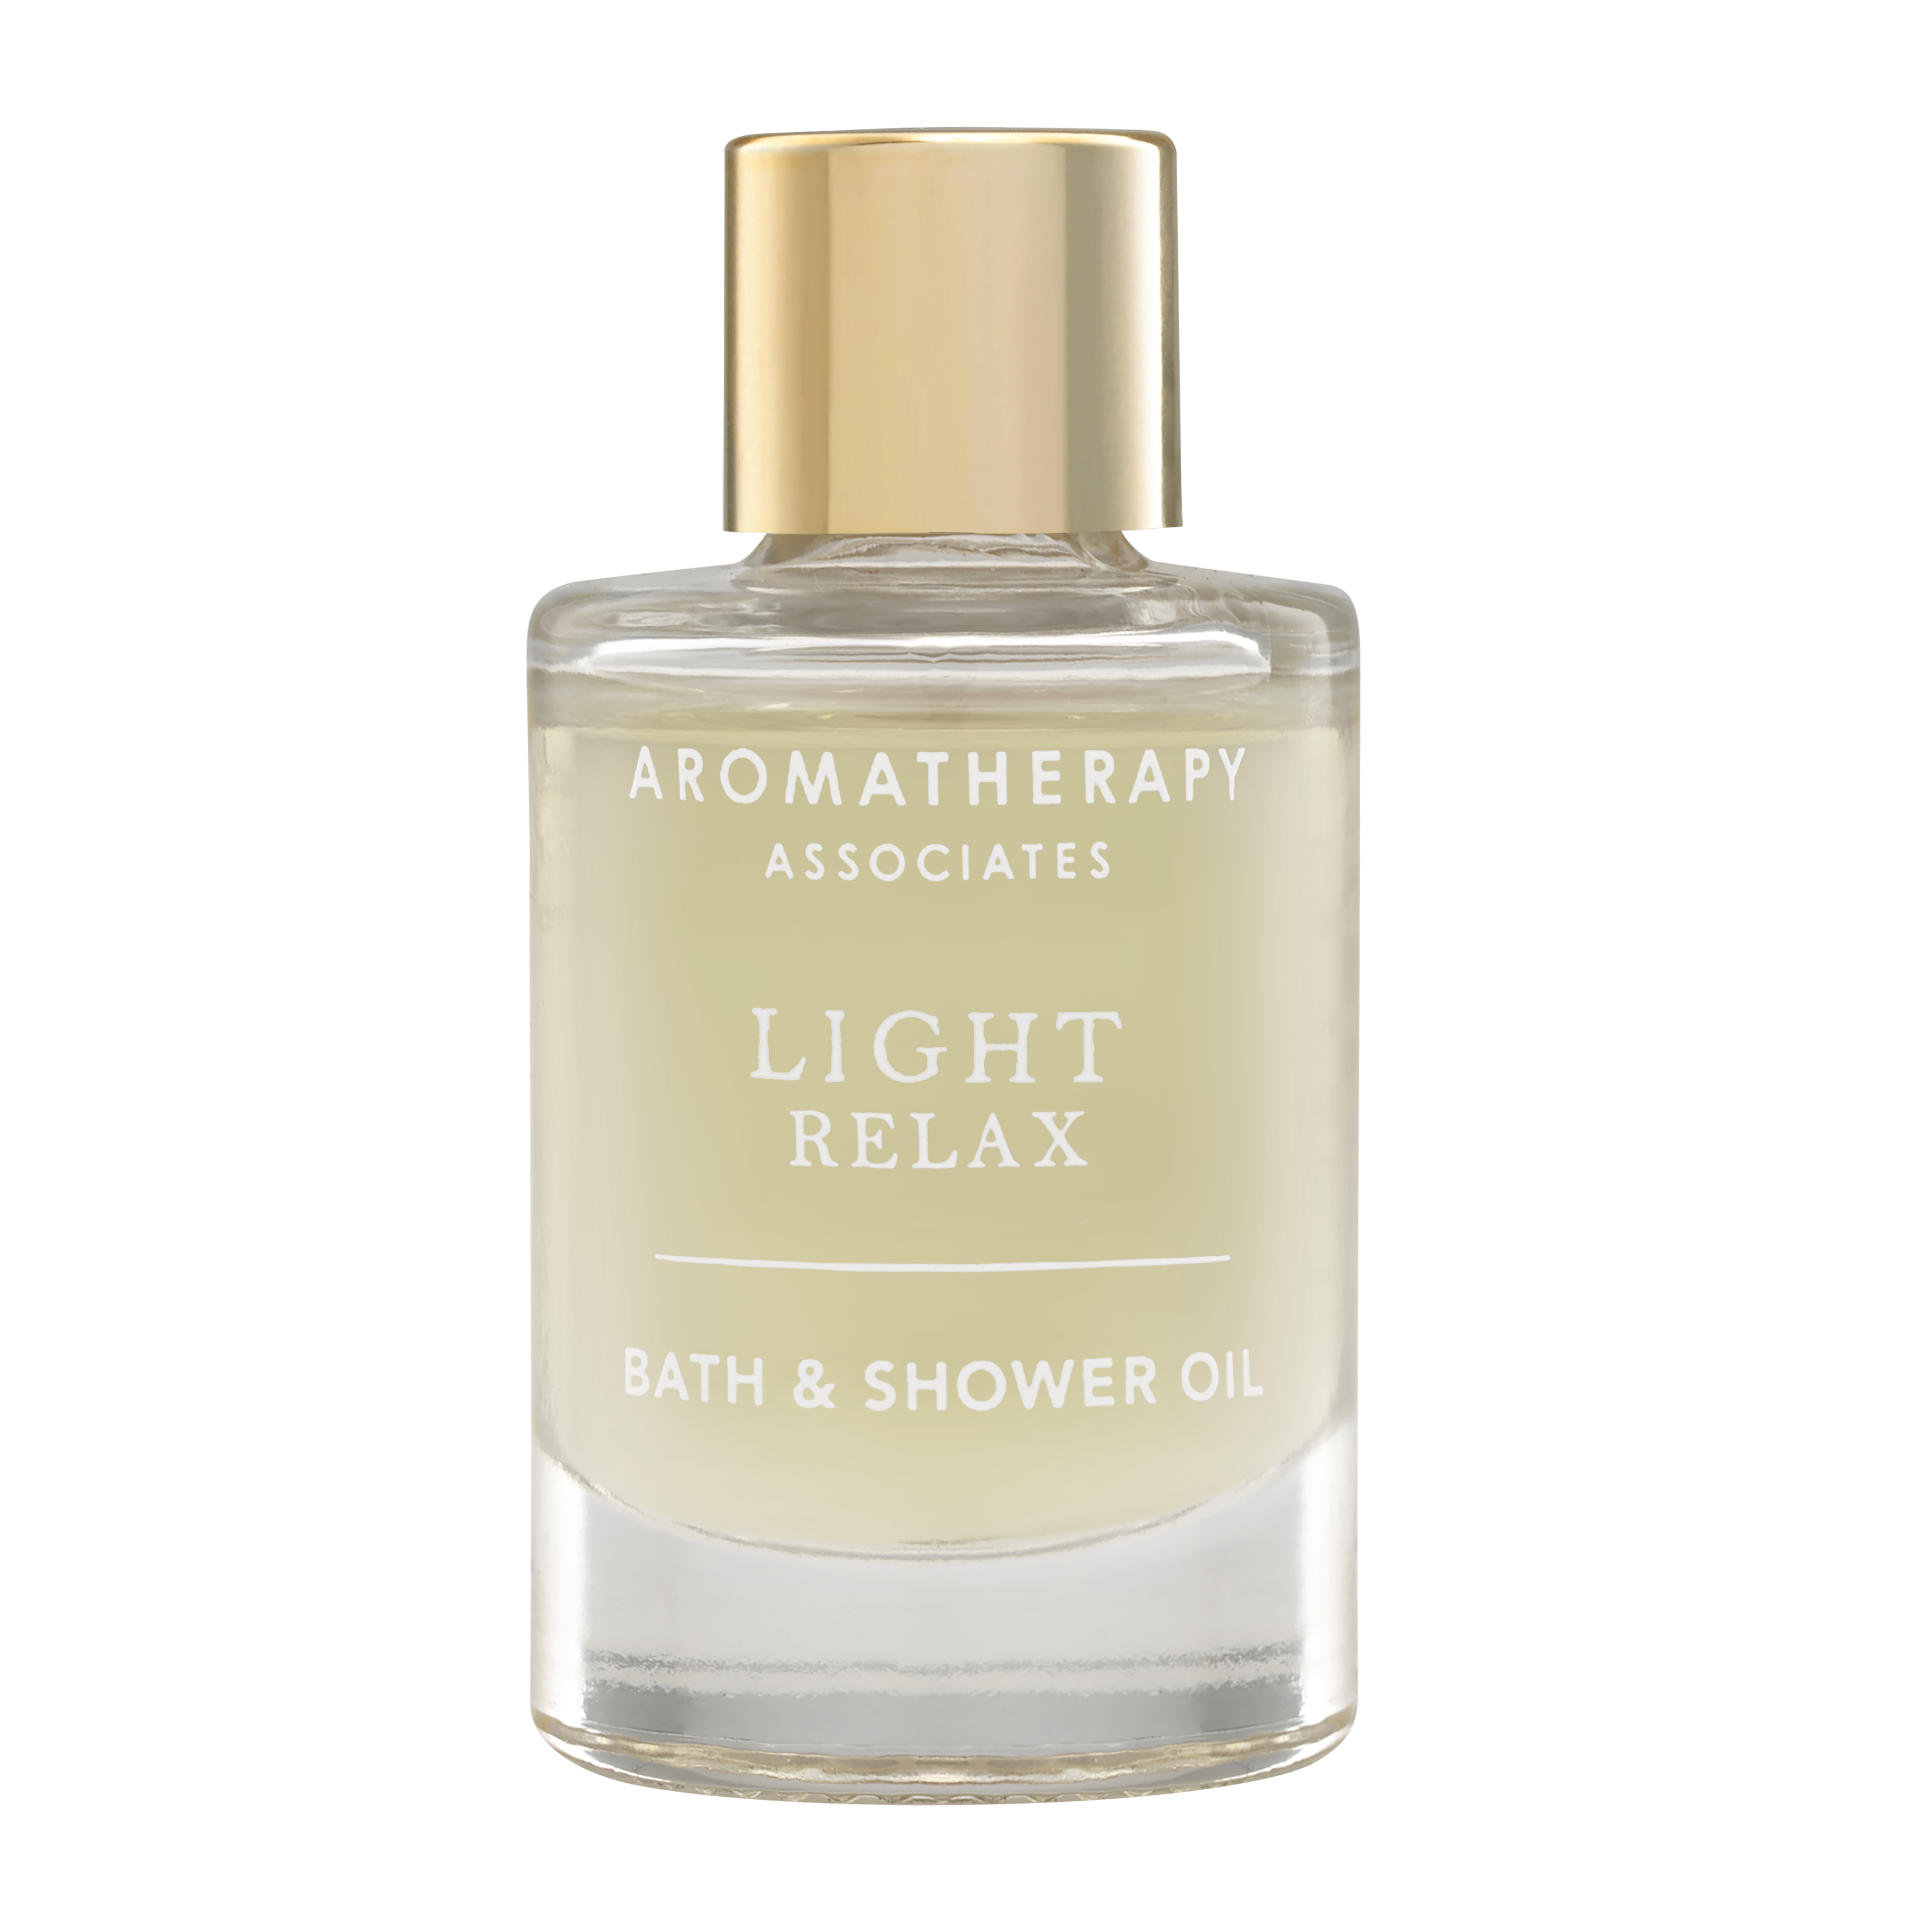 Light Relax Bath & Shower Oil 9ml Aromatherapy Associates